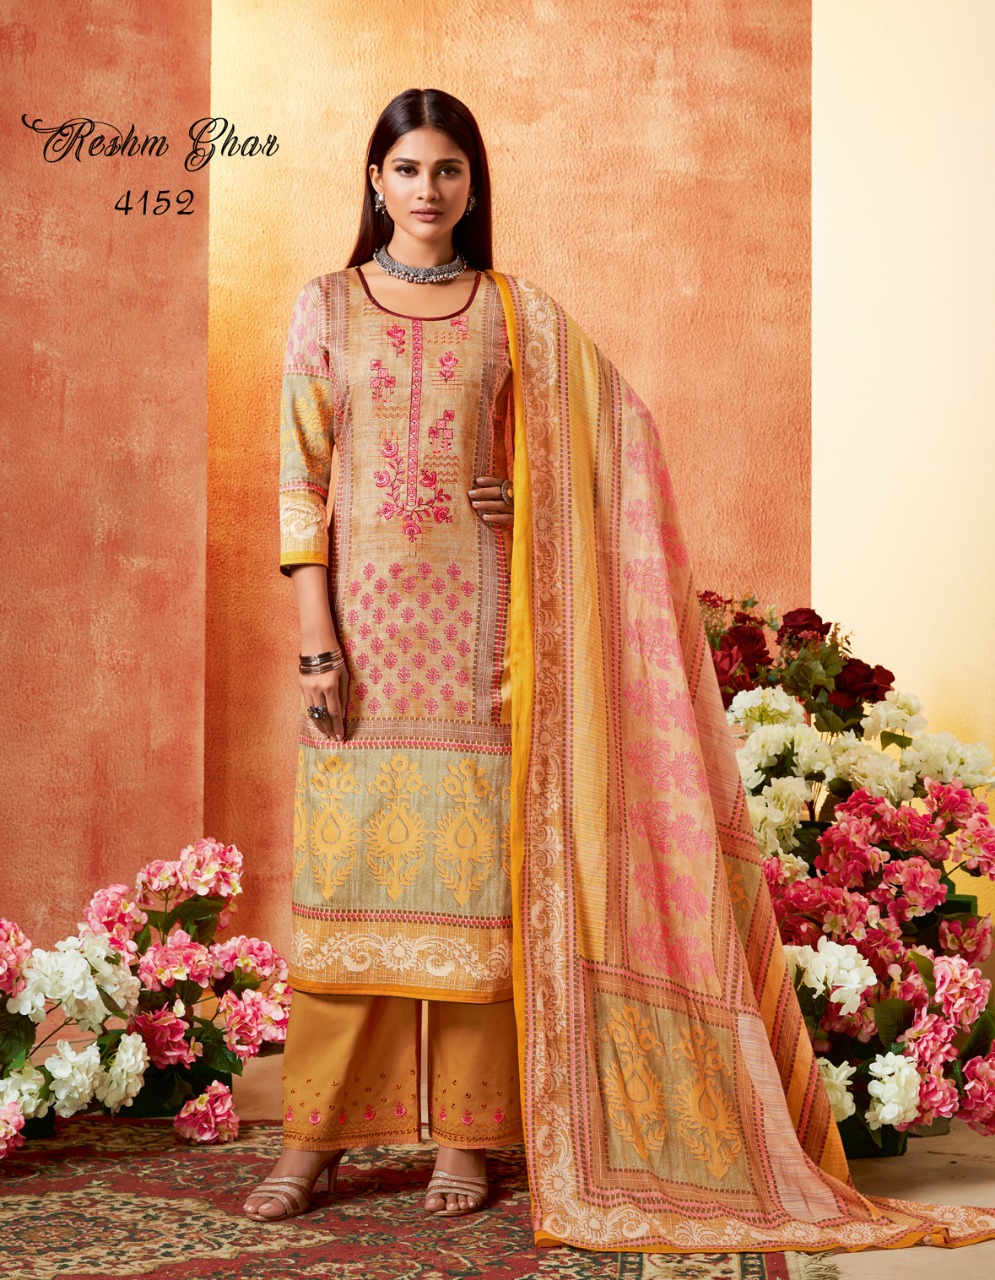 kessi fabrics reshm ghar colorful fancy collection of salwaar suits at reasonable rat